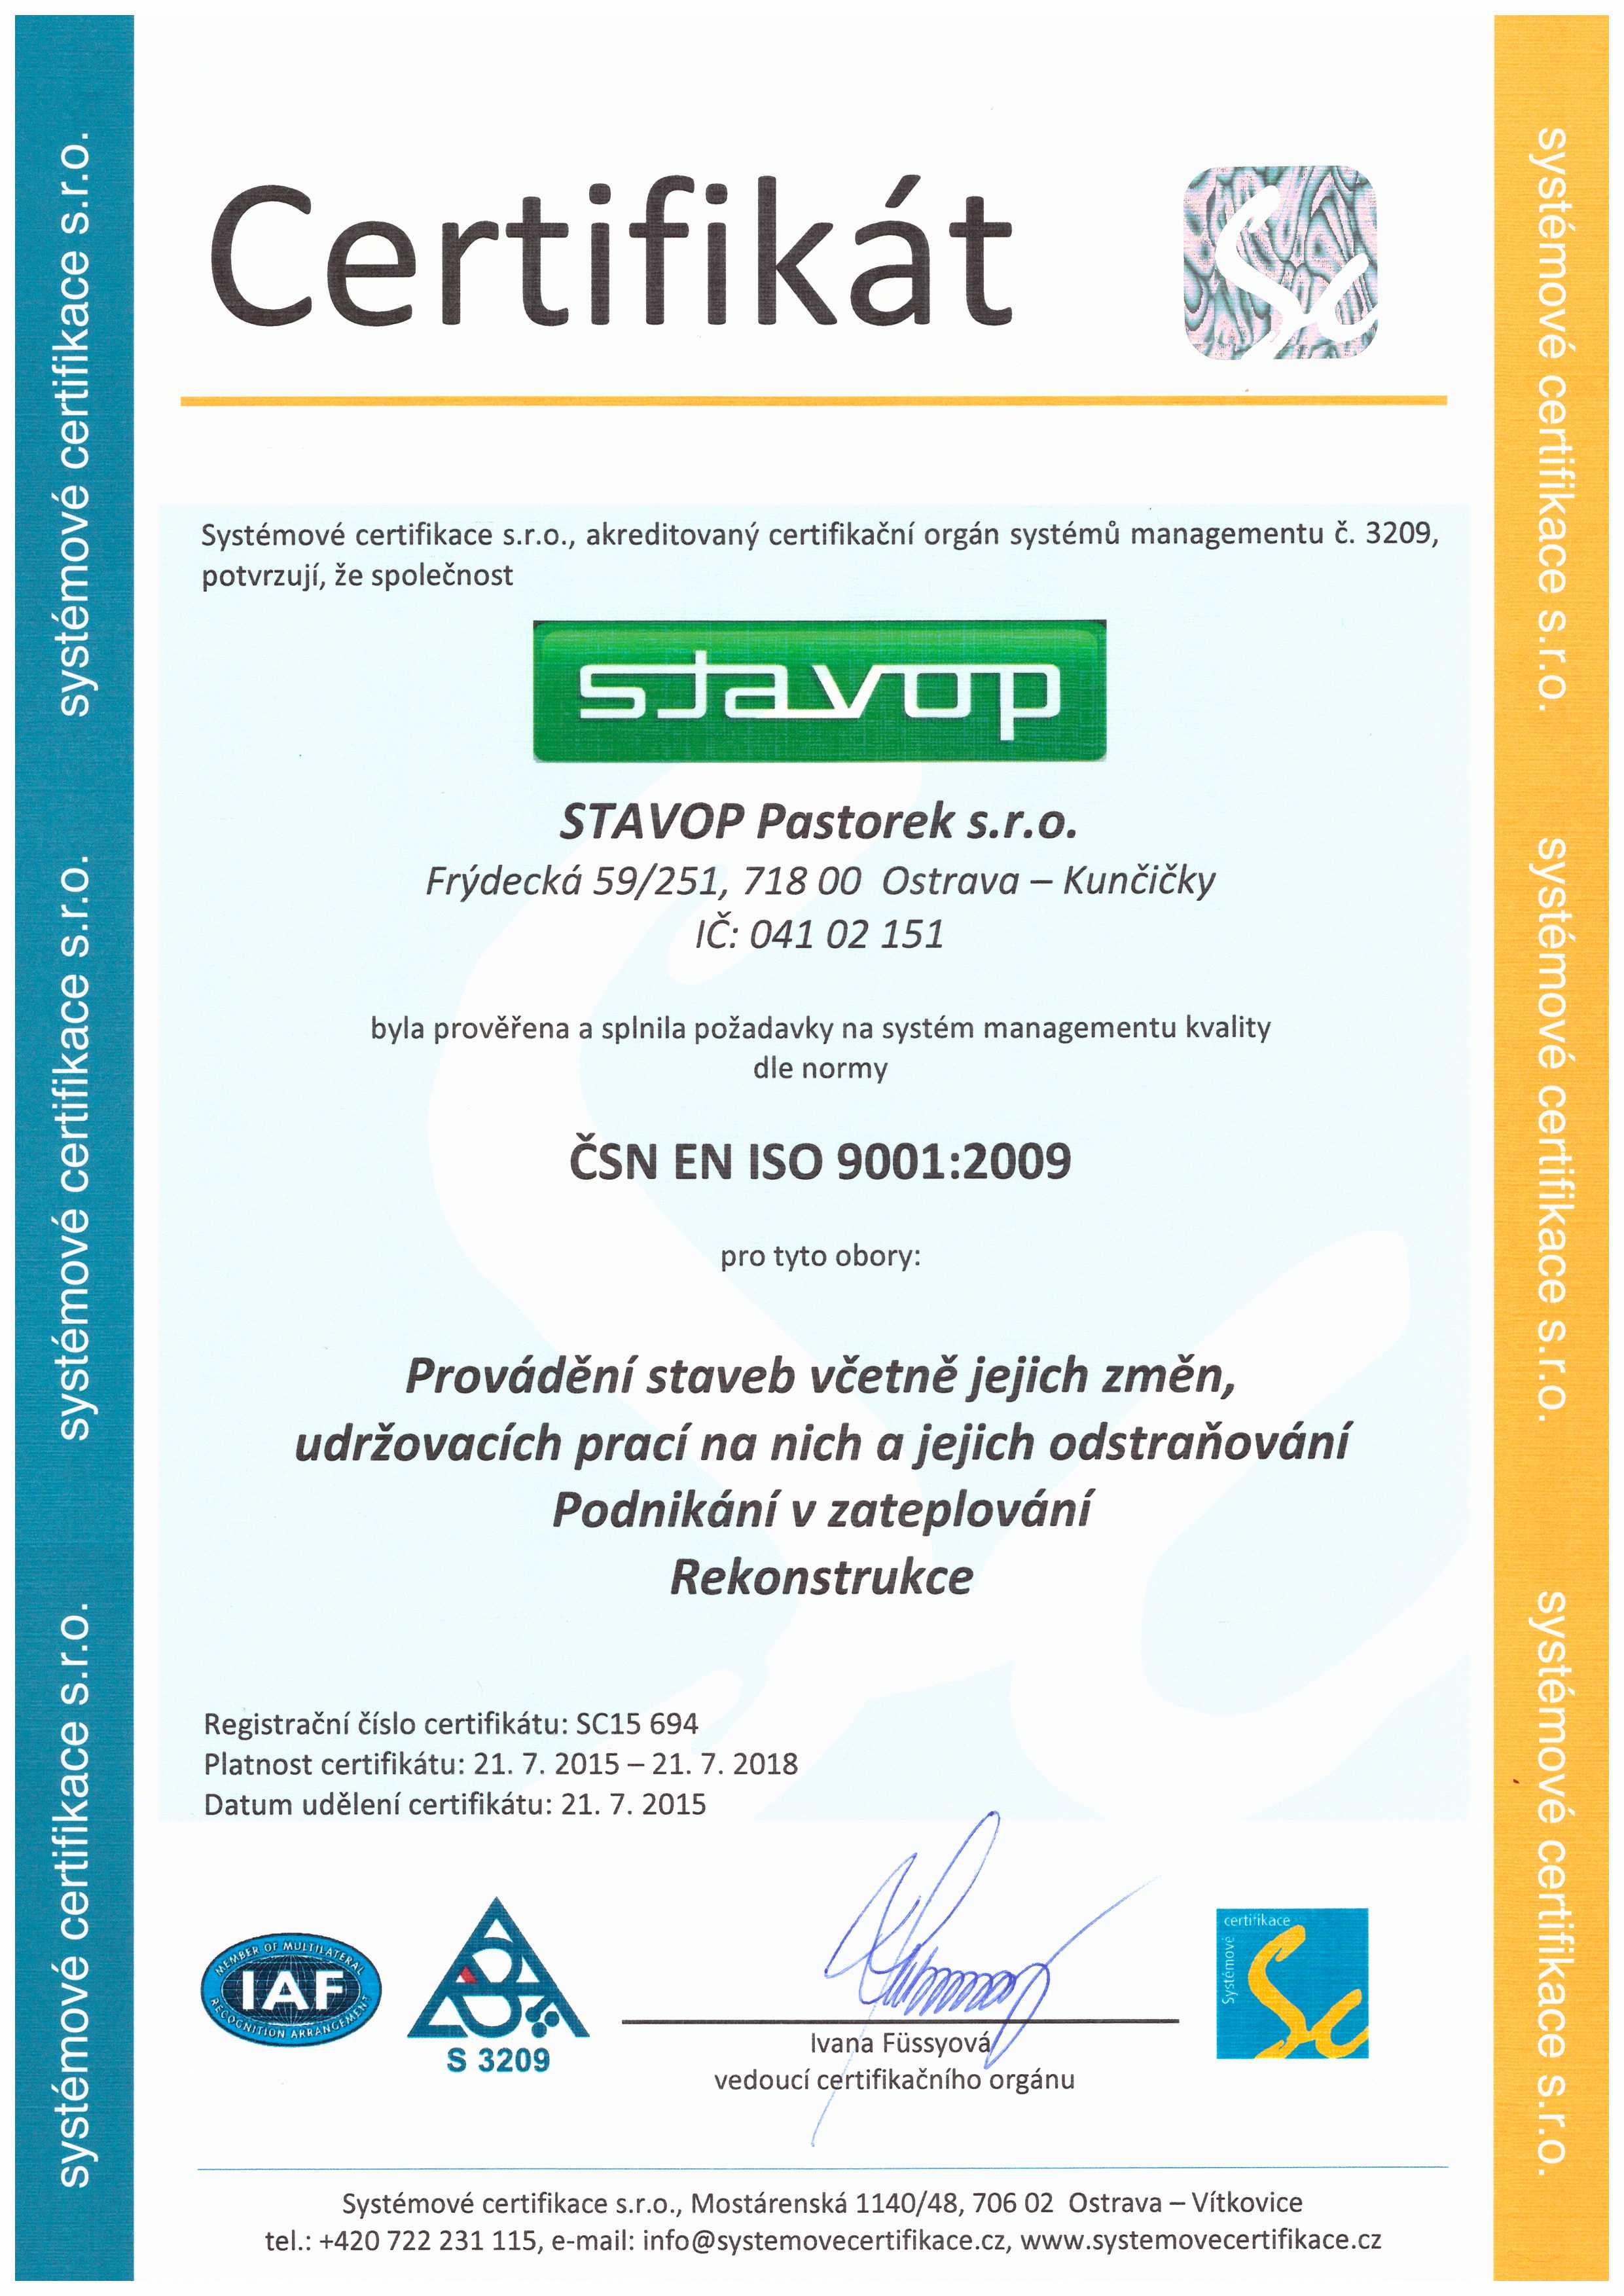 Certifikat-iso-9001-2